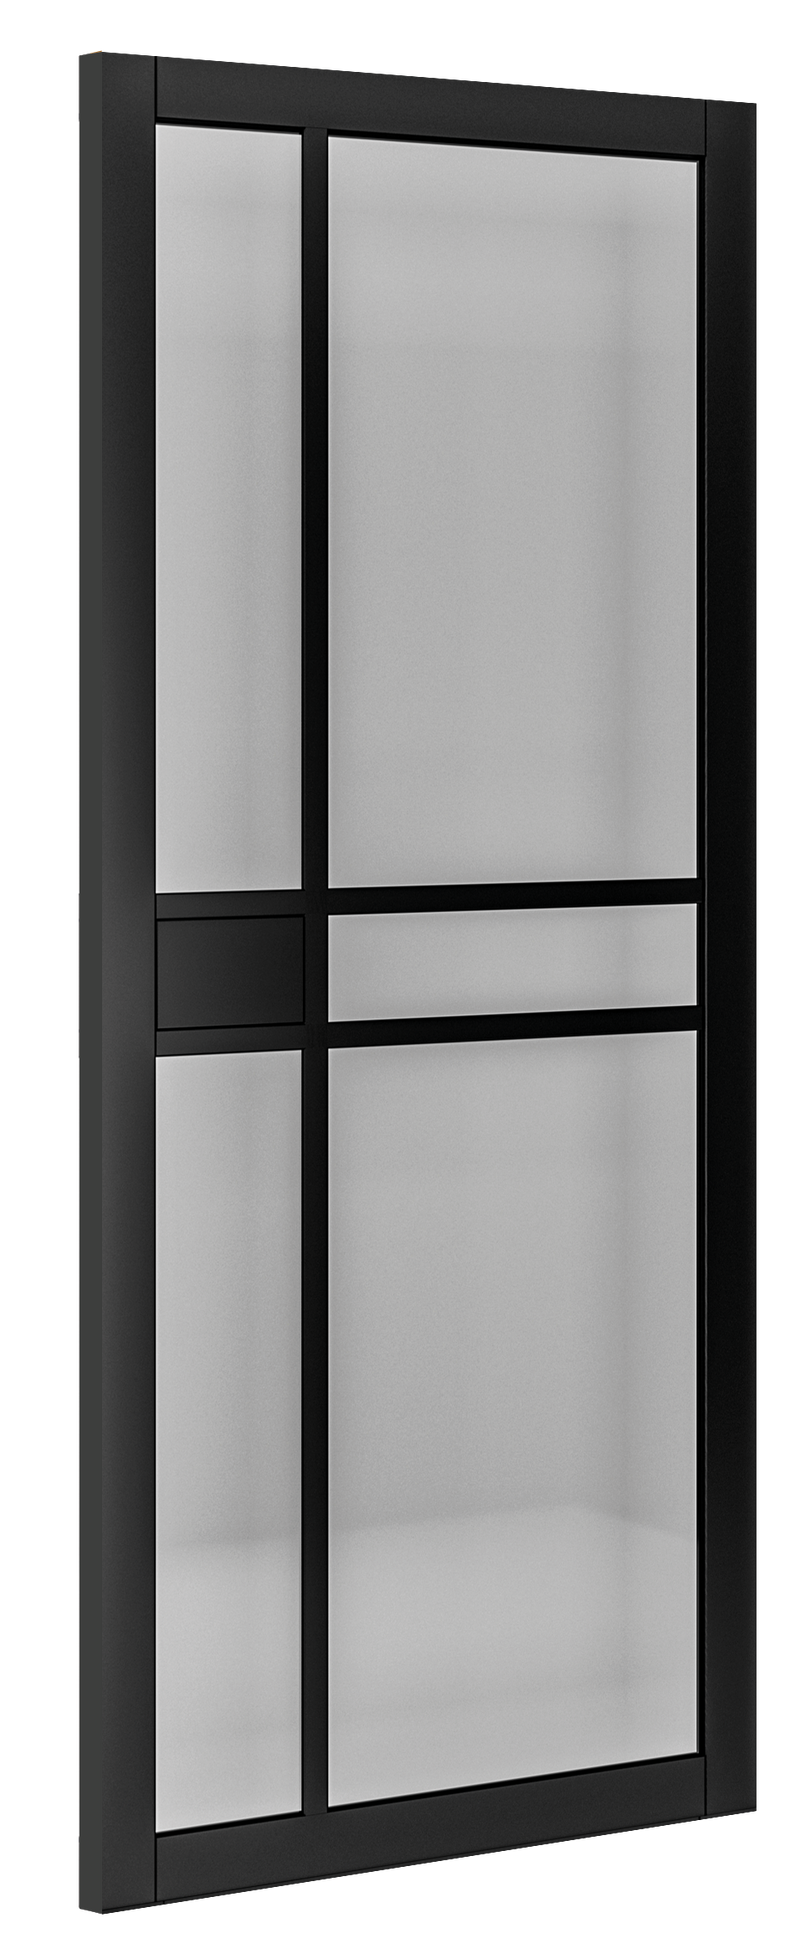 Deanta Dalston Black Prefinished Tinted Glazed Internal door